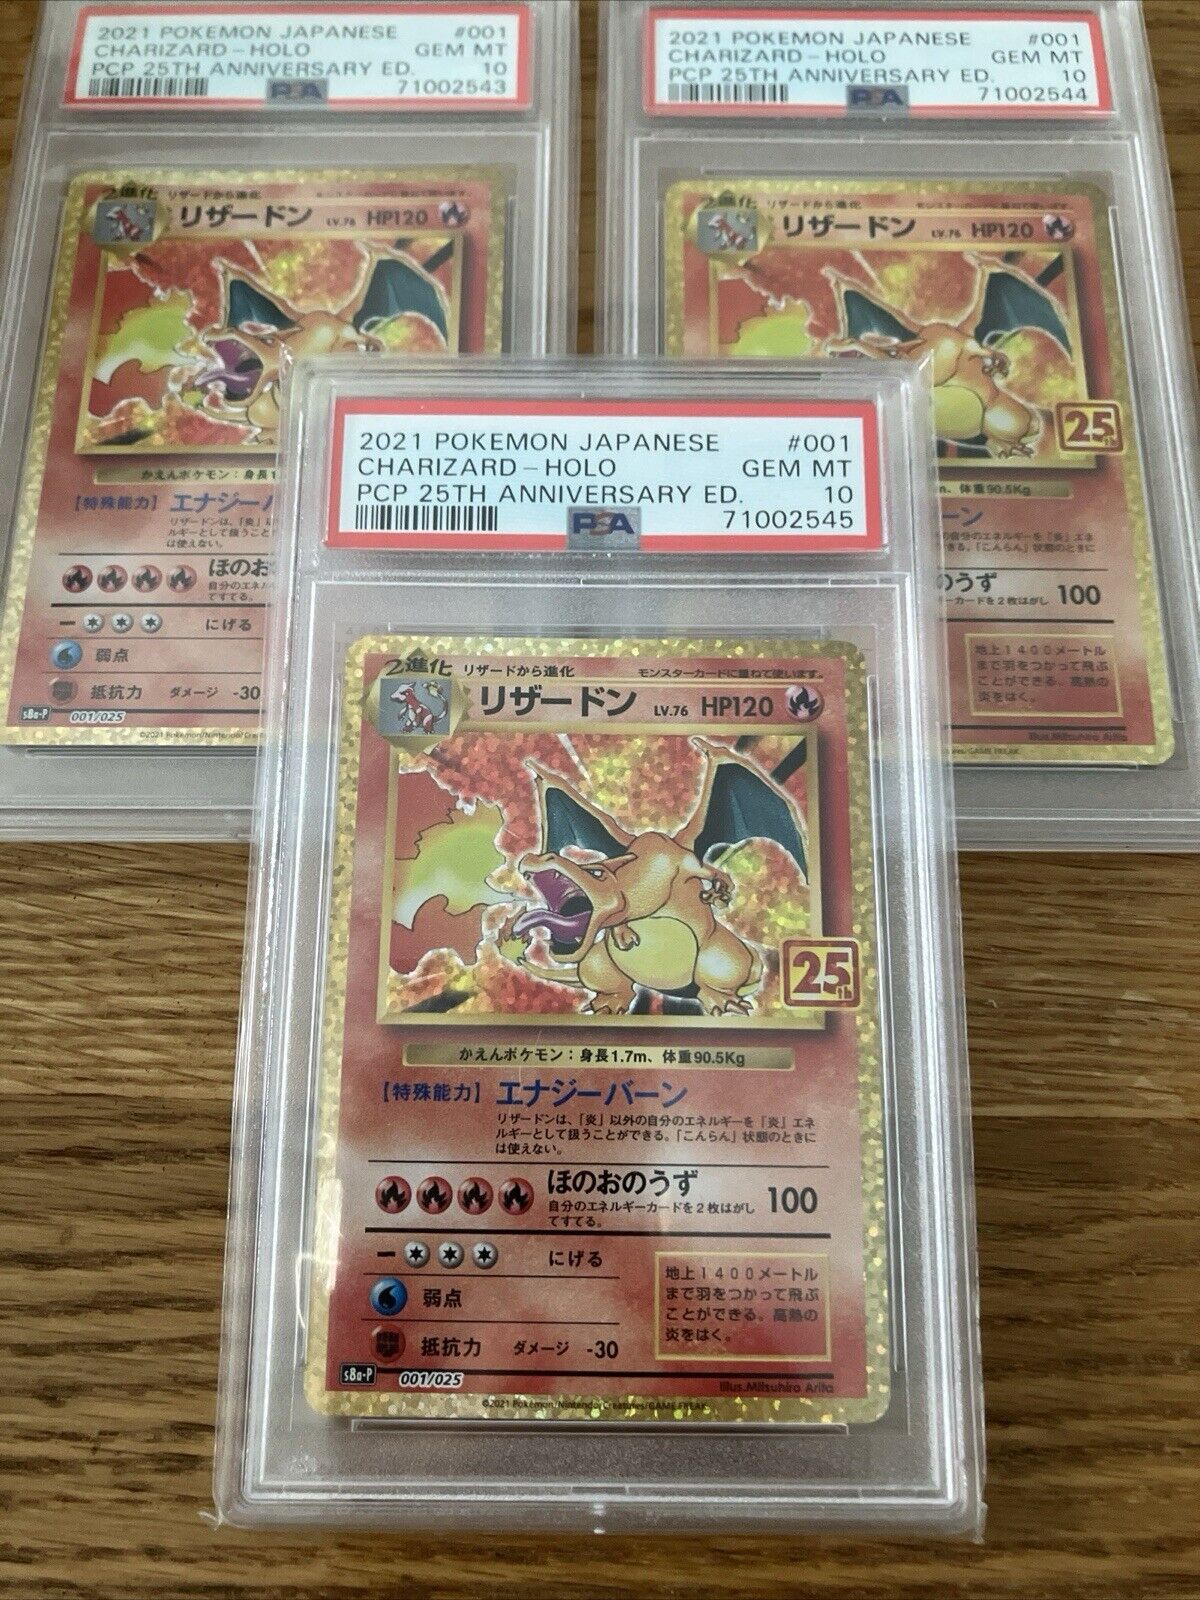 PSA 10 GEM MINT Charizard HOLO 001/025 s8a-P 25th Anniversary Japanese Pokemon